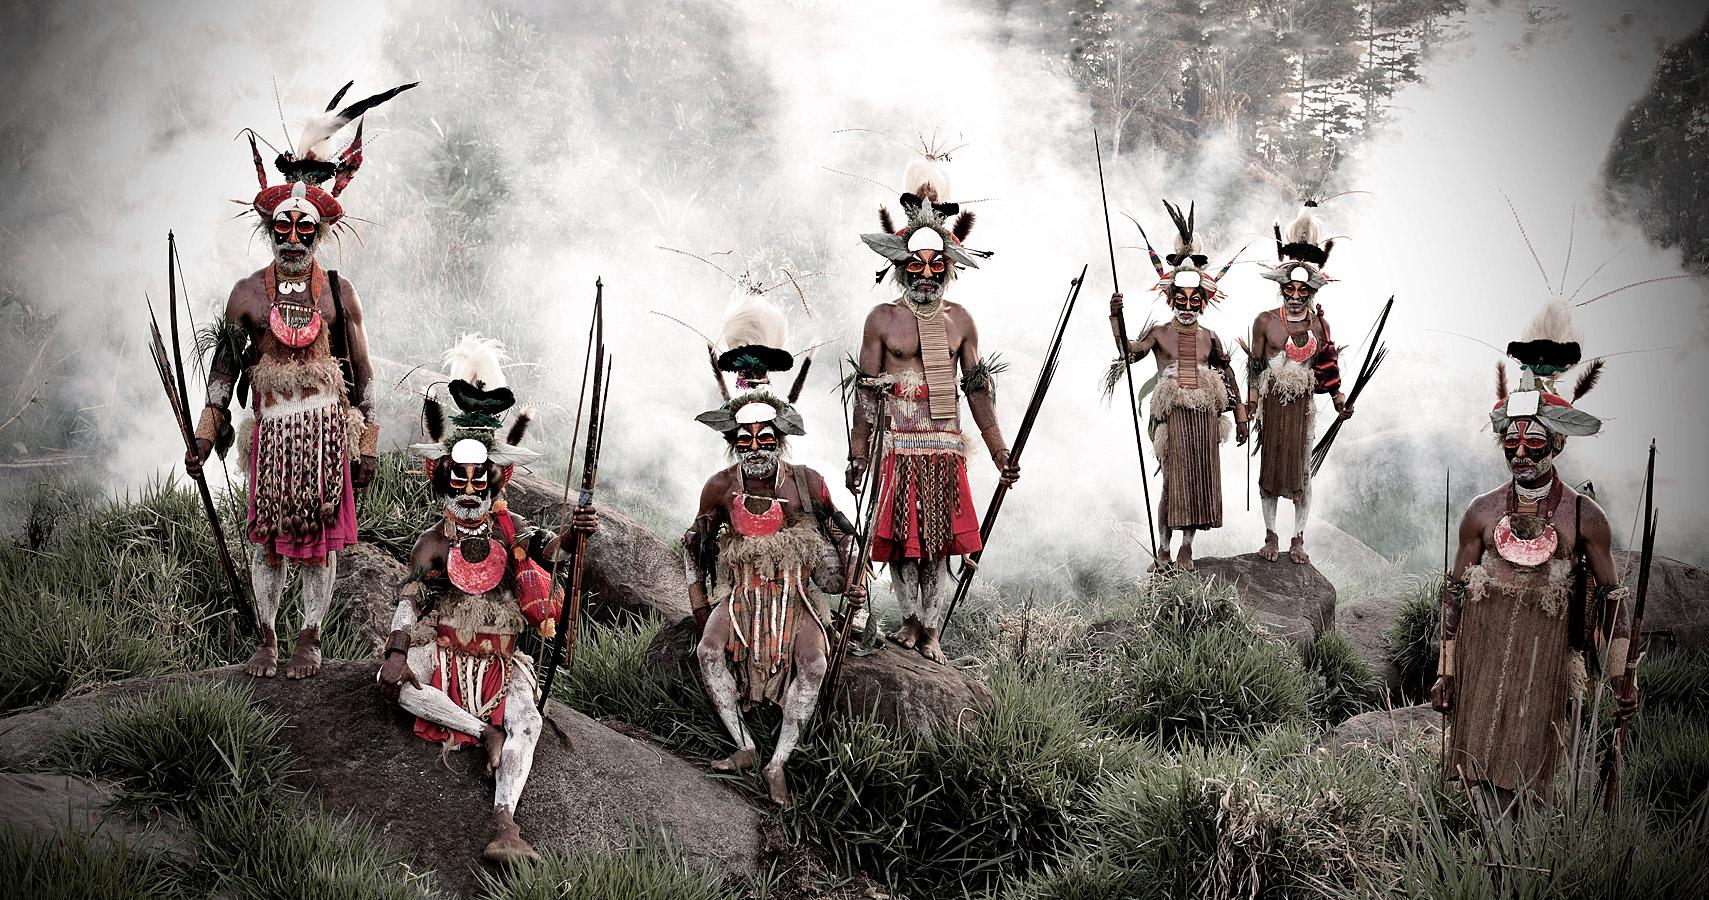 "XV 78 - Keke Kombea, Tande Mala, Lebosi Kupu, Mumburi Mupi, John Kundi, Menaja Koke, Likekaipia Tribe - Ponowi Village, Jalibu Mountains, Western Highlands - Papua New Guinea, 2010

Papua is where we started our two-month trip in Oceania. As a